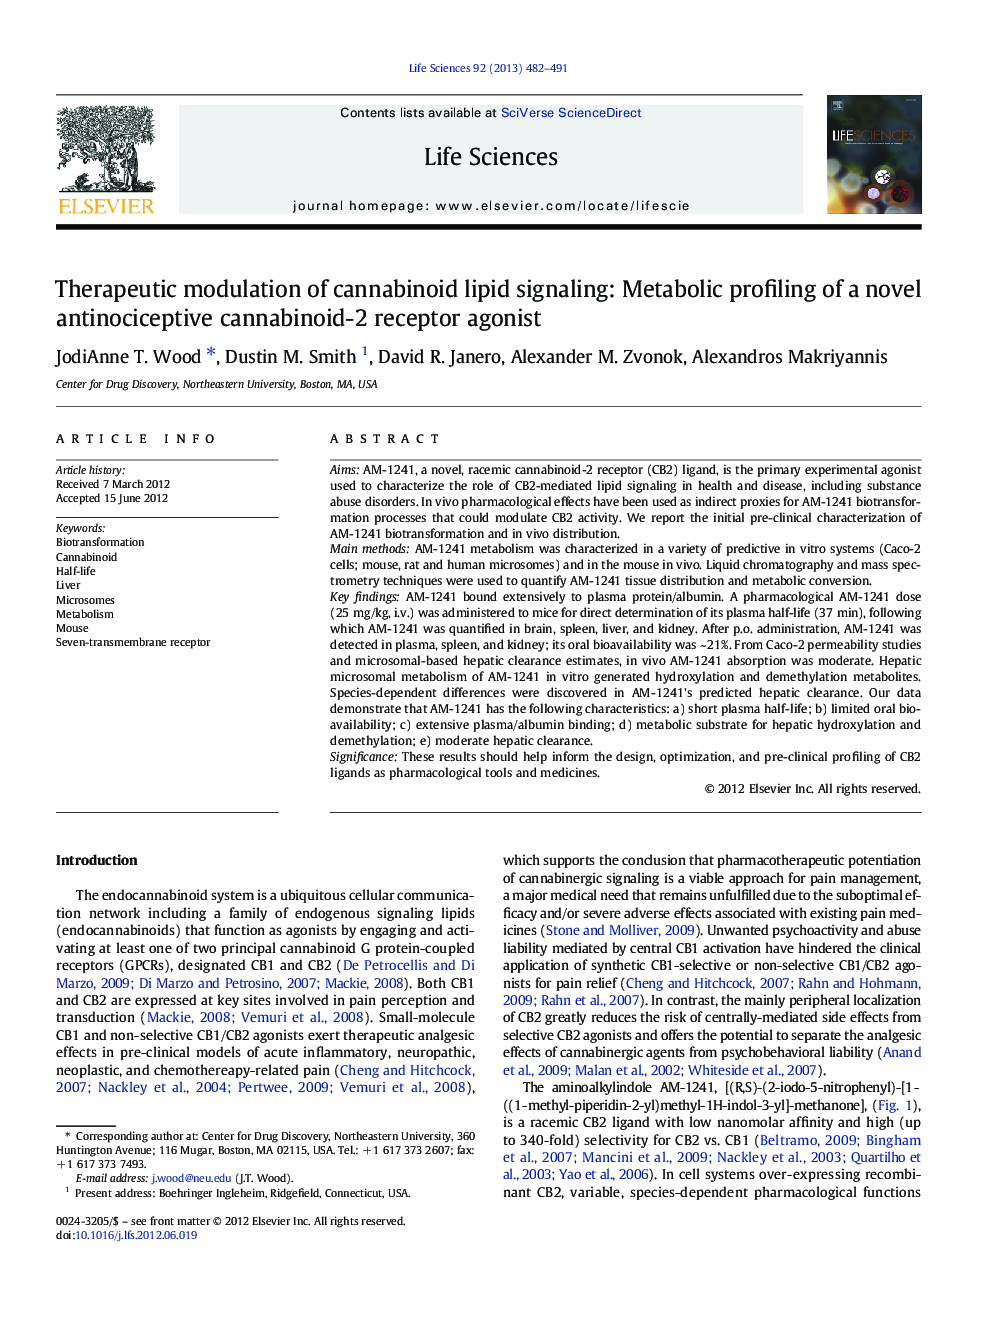 Therapeutic modulation of cannabinoid lipid signaling: Metabolic profiling of a novel antinociceptive cannabinoid-2 receptor agonist